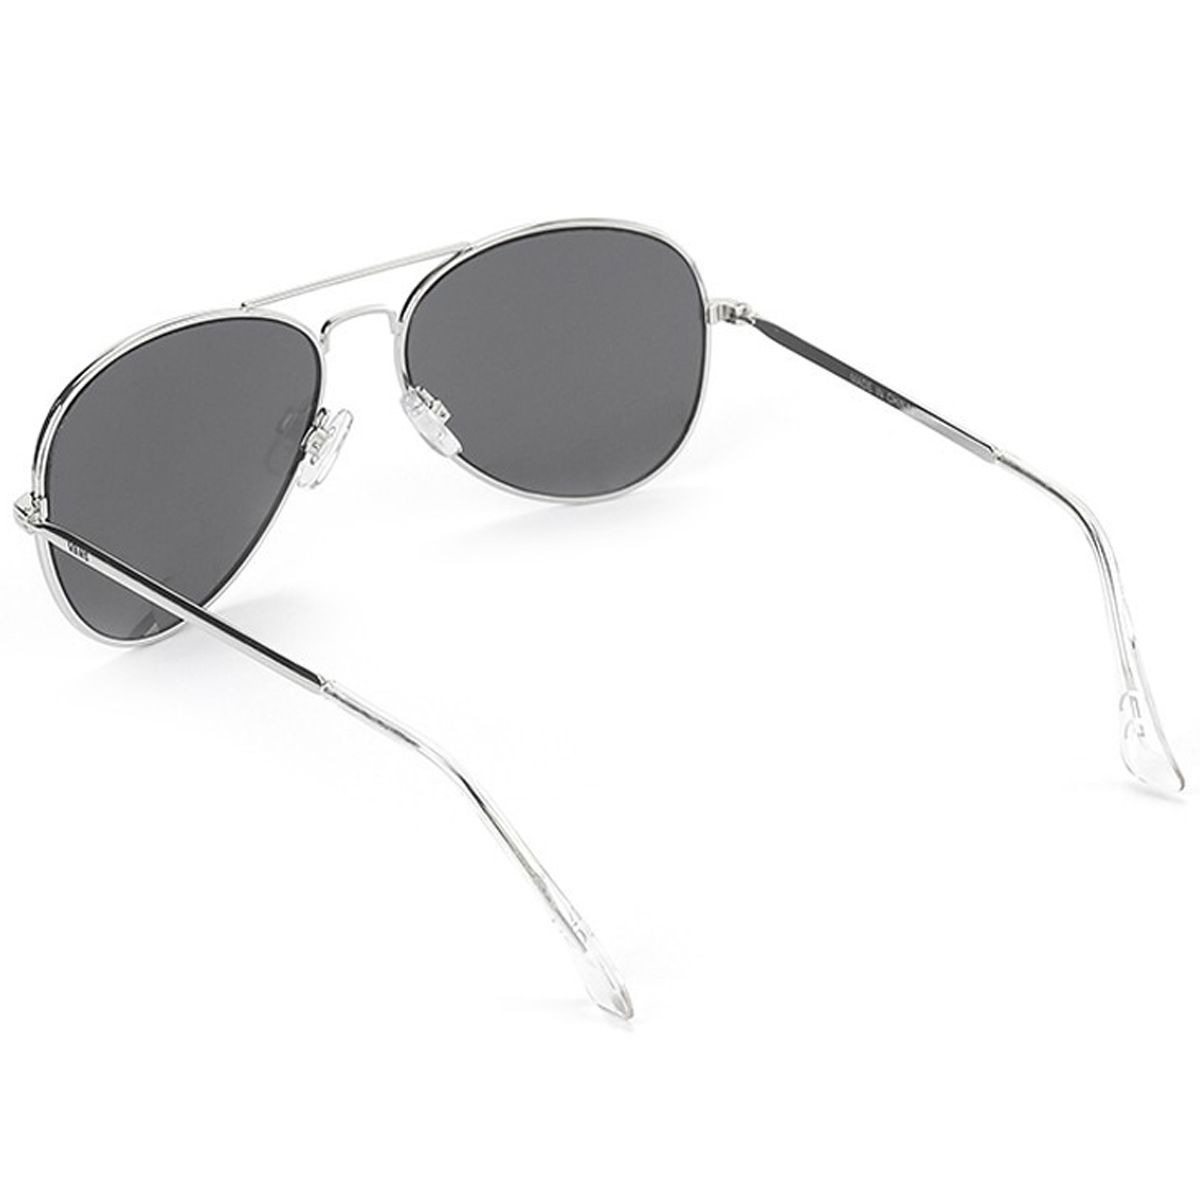 Henderson II - Vans Sunglasses Silver Shades